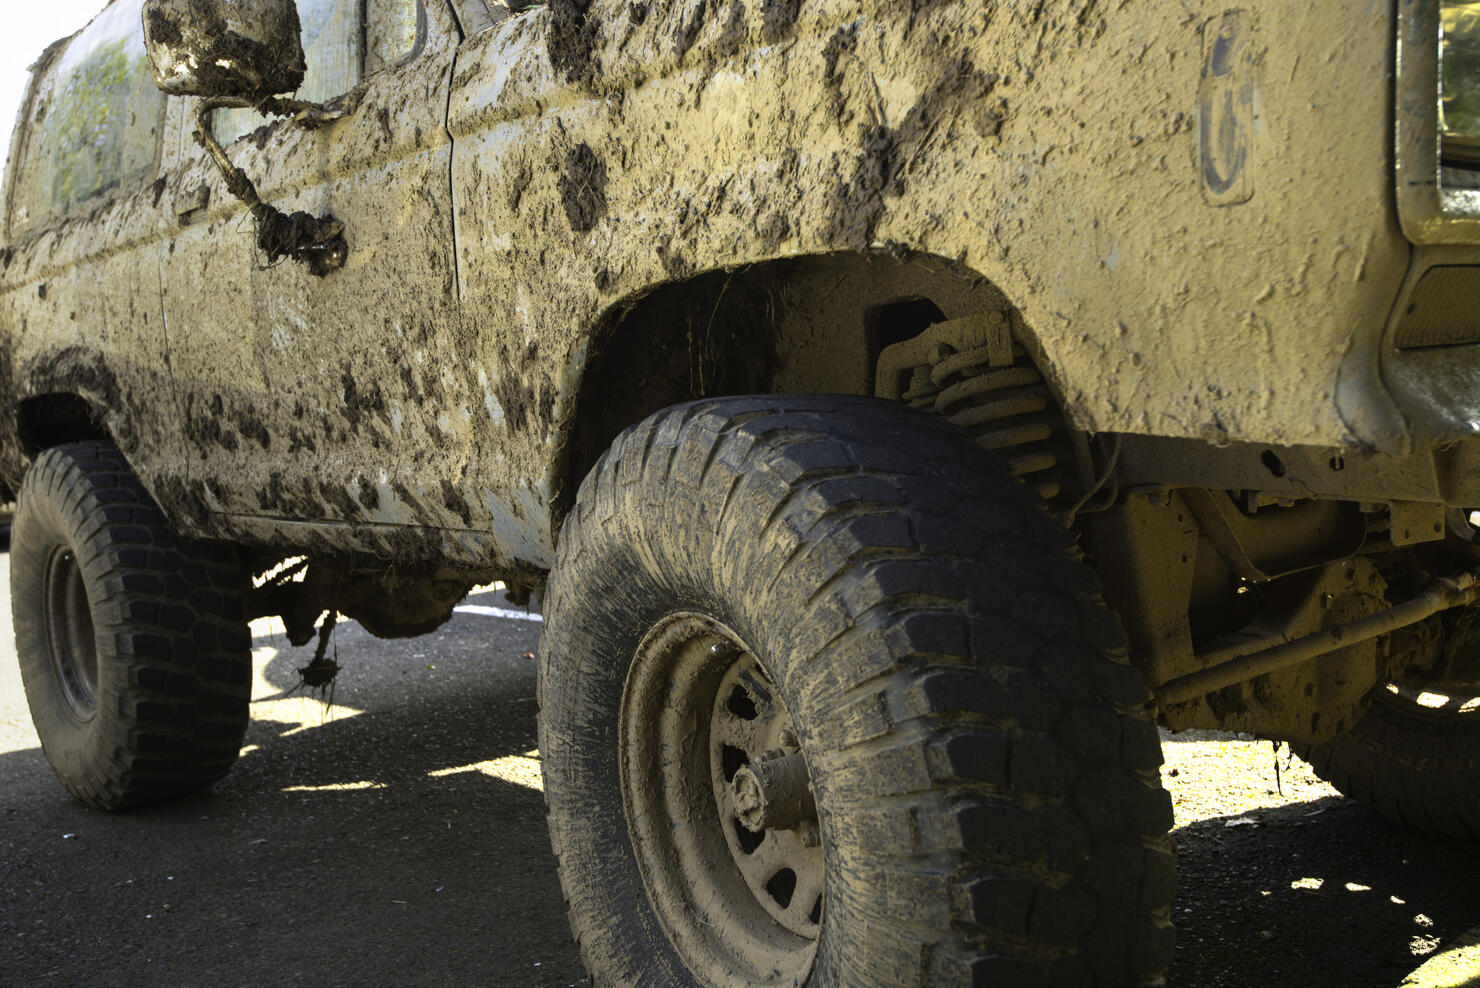 Mud covered vehicle